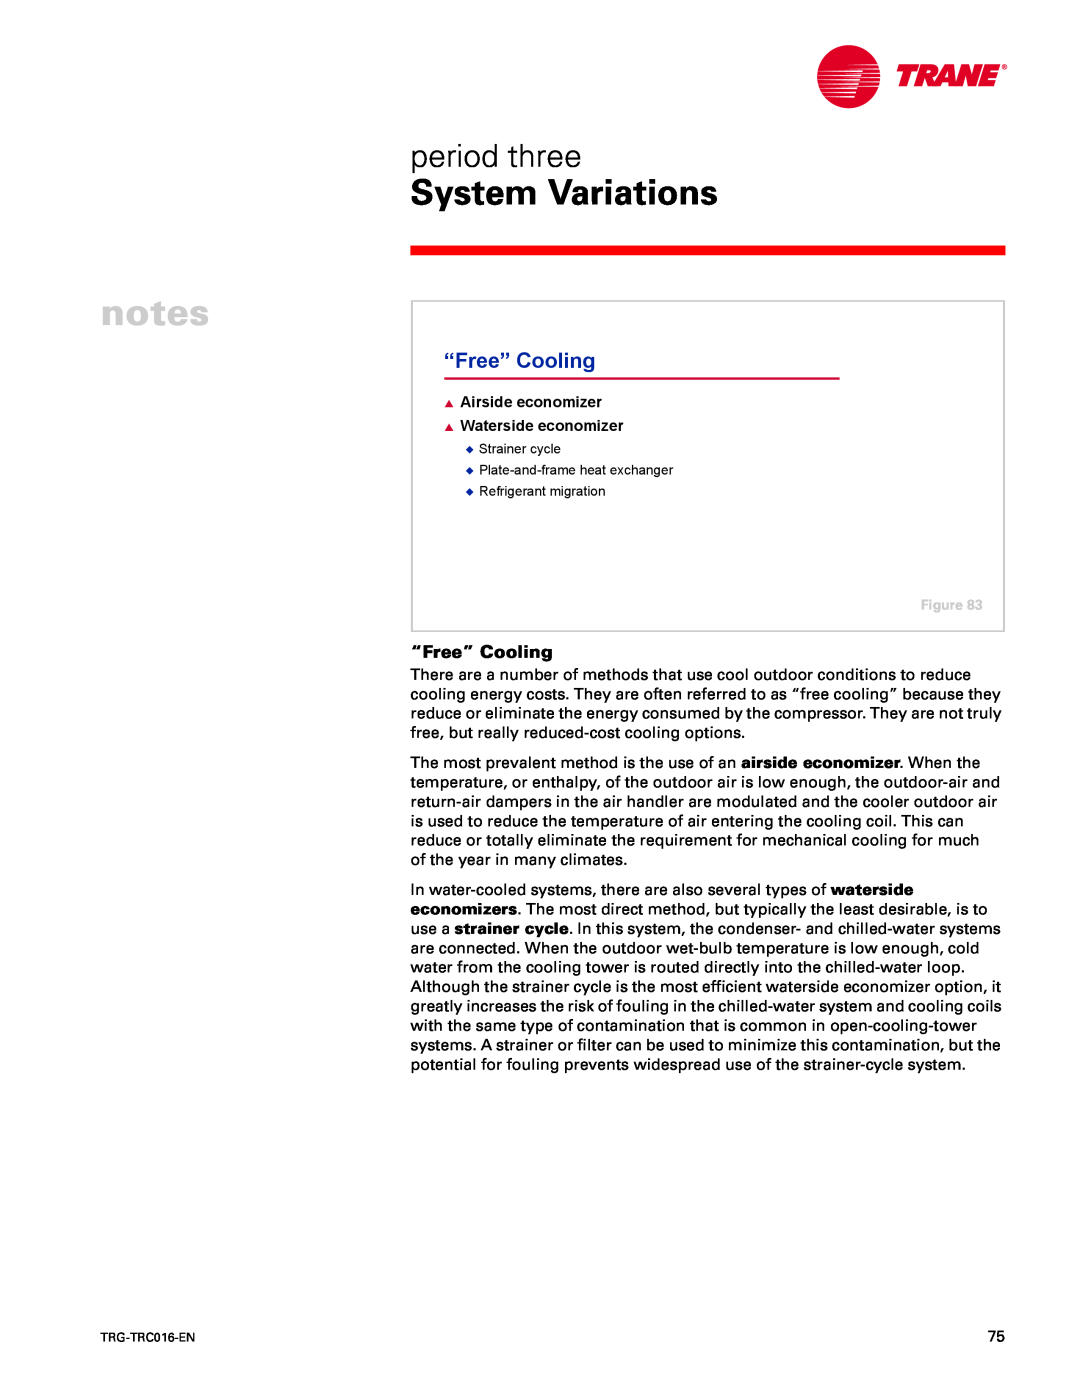 Trane TRG-TRC016-EN manual “Free” Cooling, notes, System Variations, period three, Airside economizer Waterside economizer 